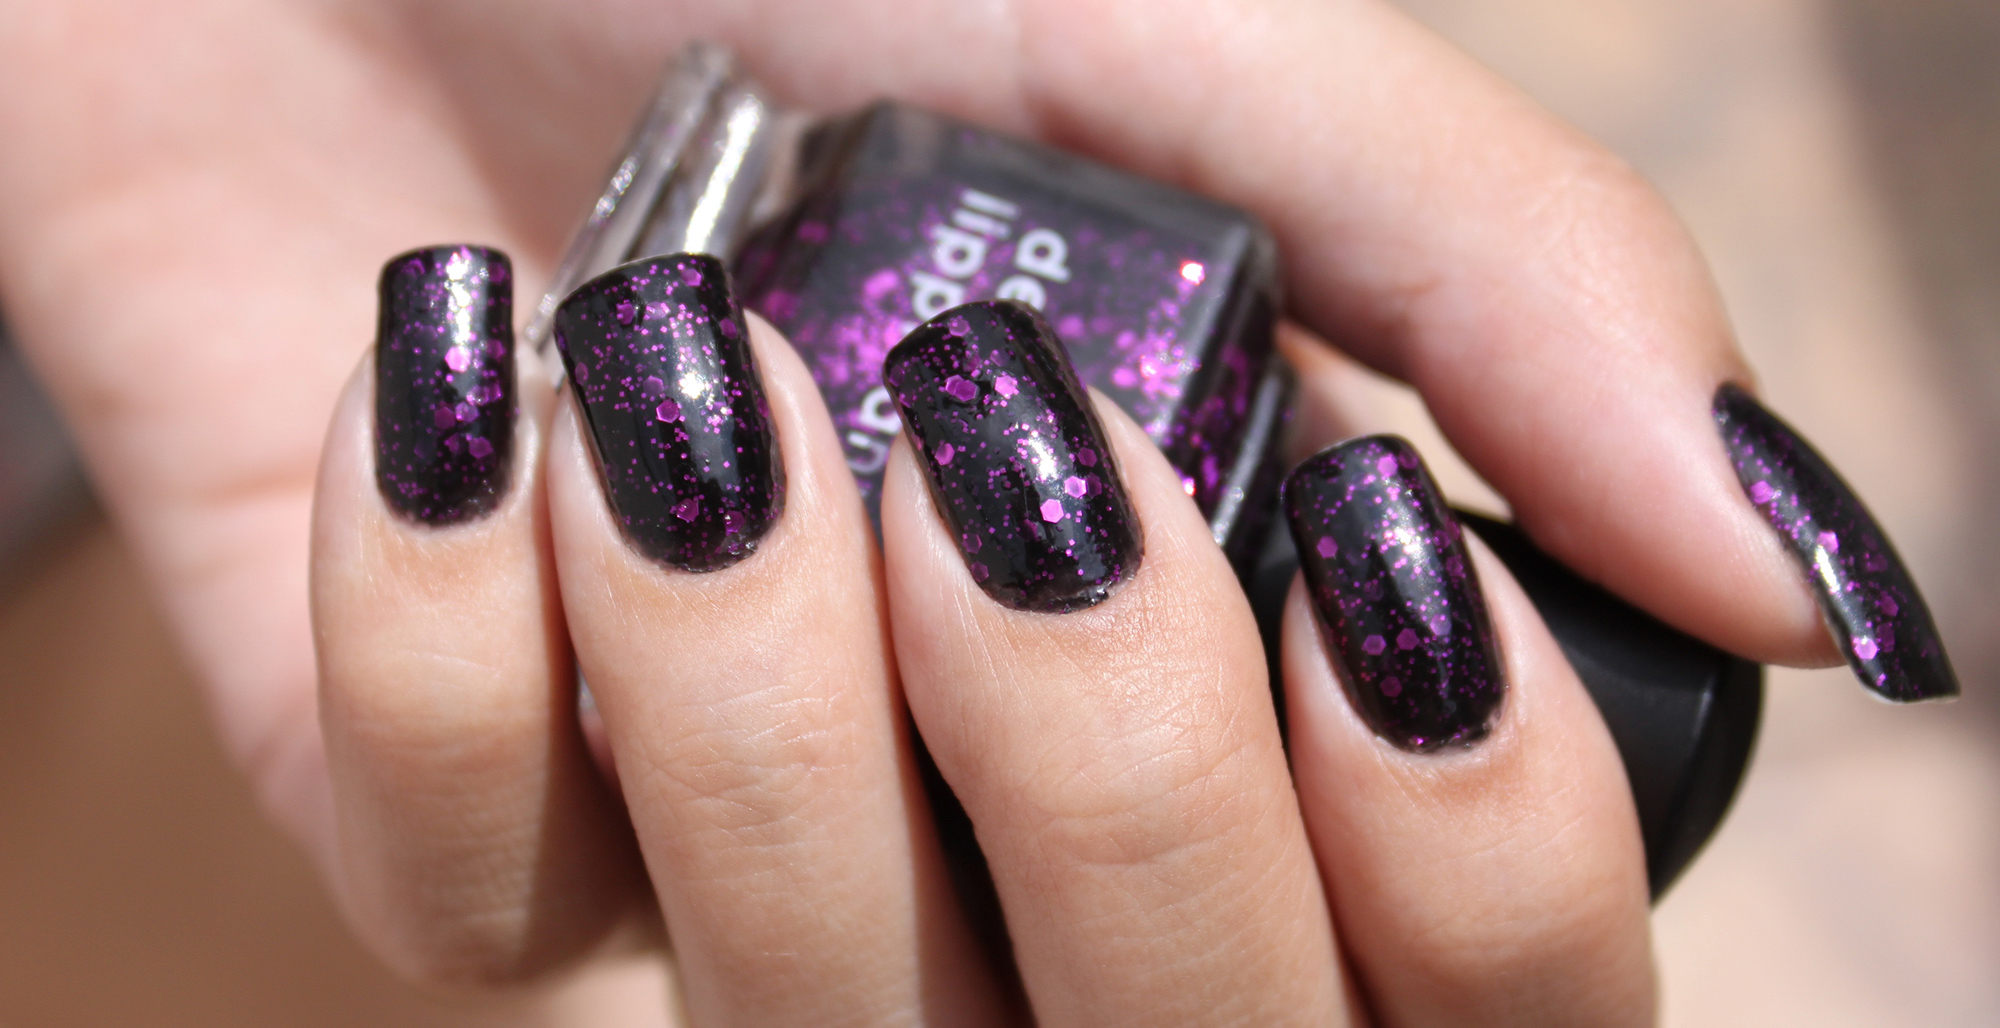 10. "Dark purple nail color for dark skin" - wide 2